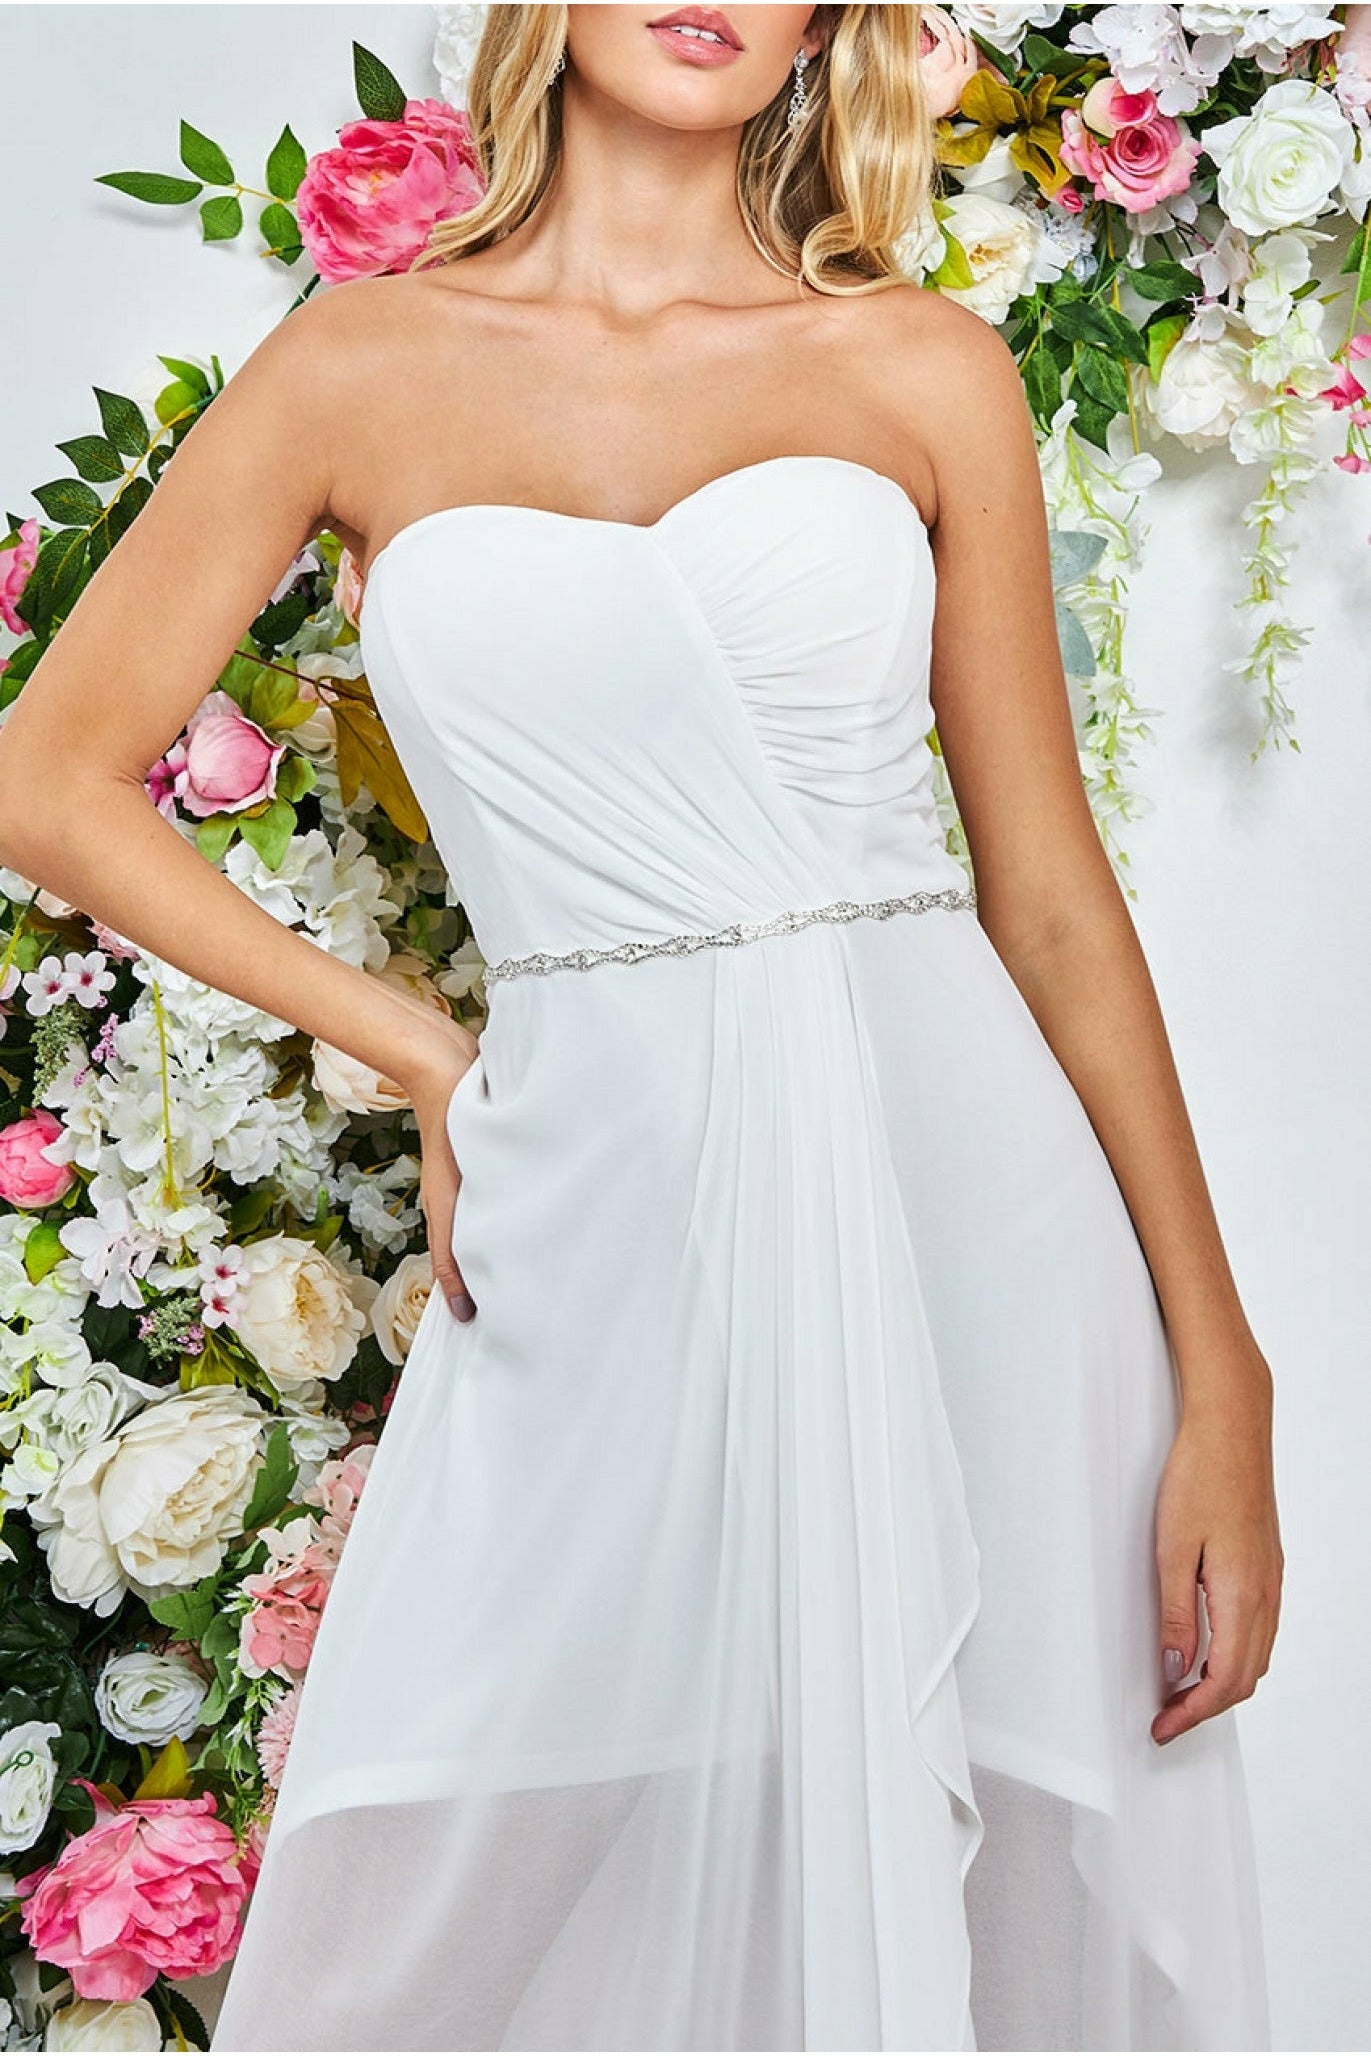 Bardot Chiffon Wedding Dress With Belt - White DR3069W